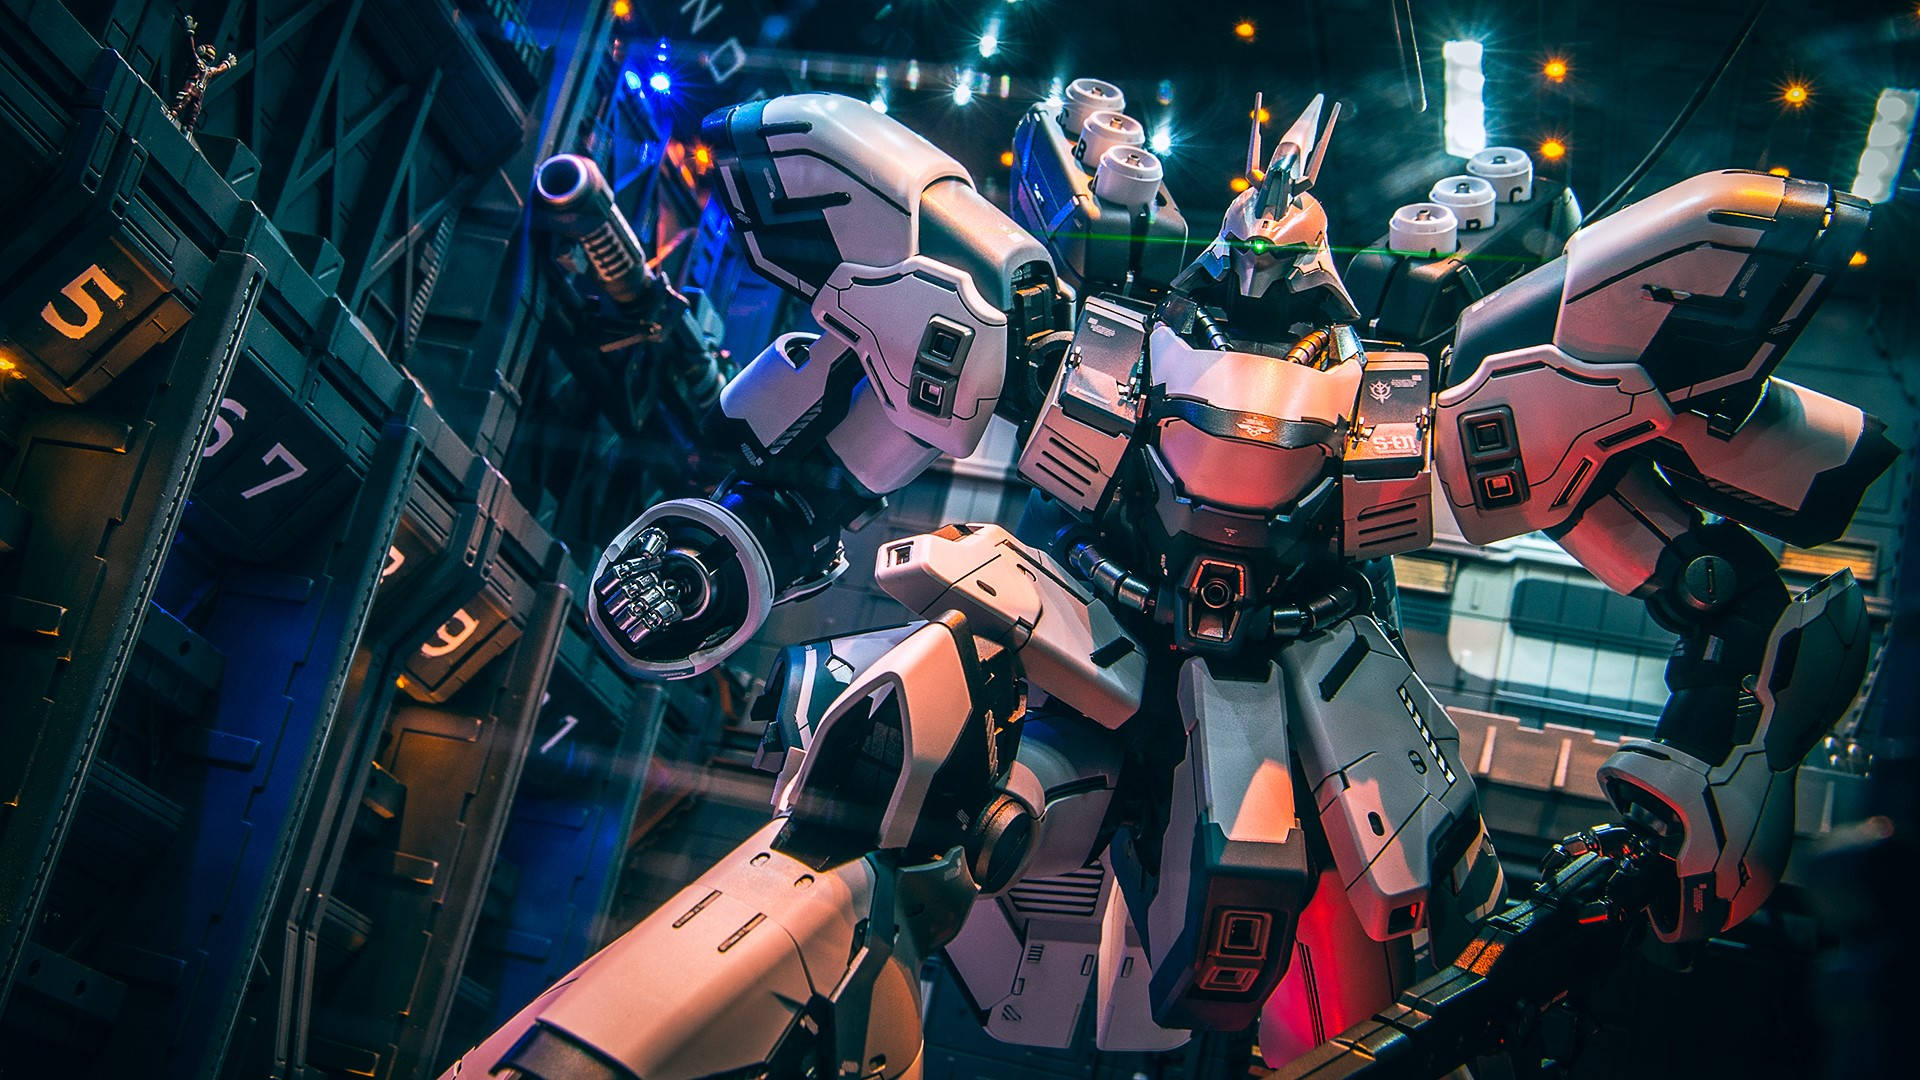 Mobile Suit Gundam With A Machine Gun Background